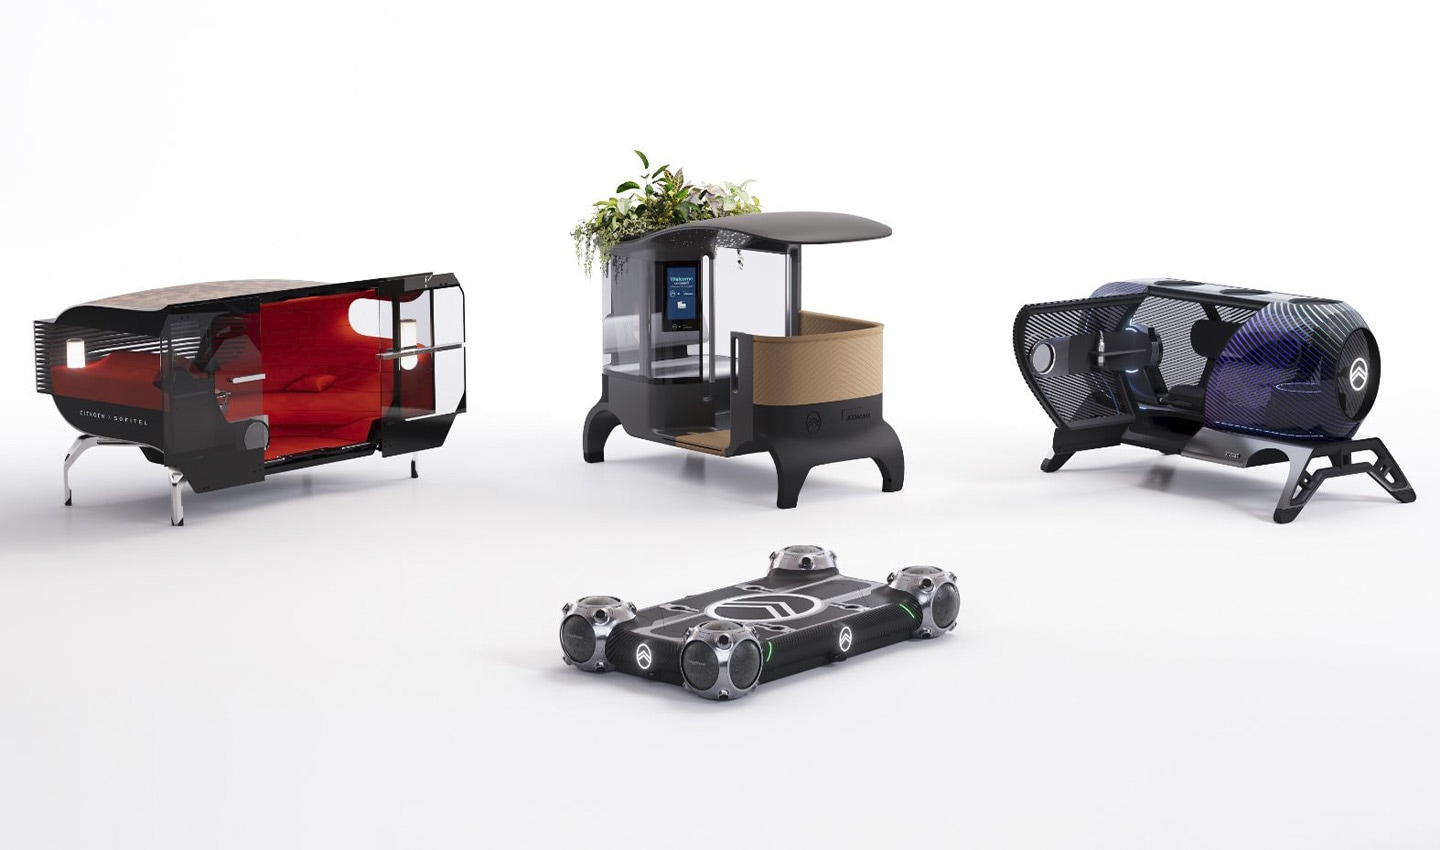 The Citroen Skate, is a multi-purpose, modular electric vehicle concept.